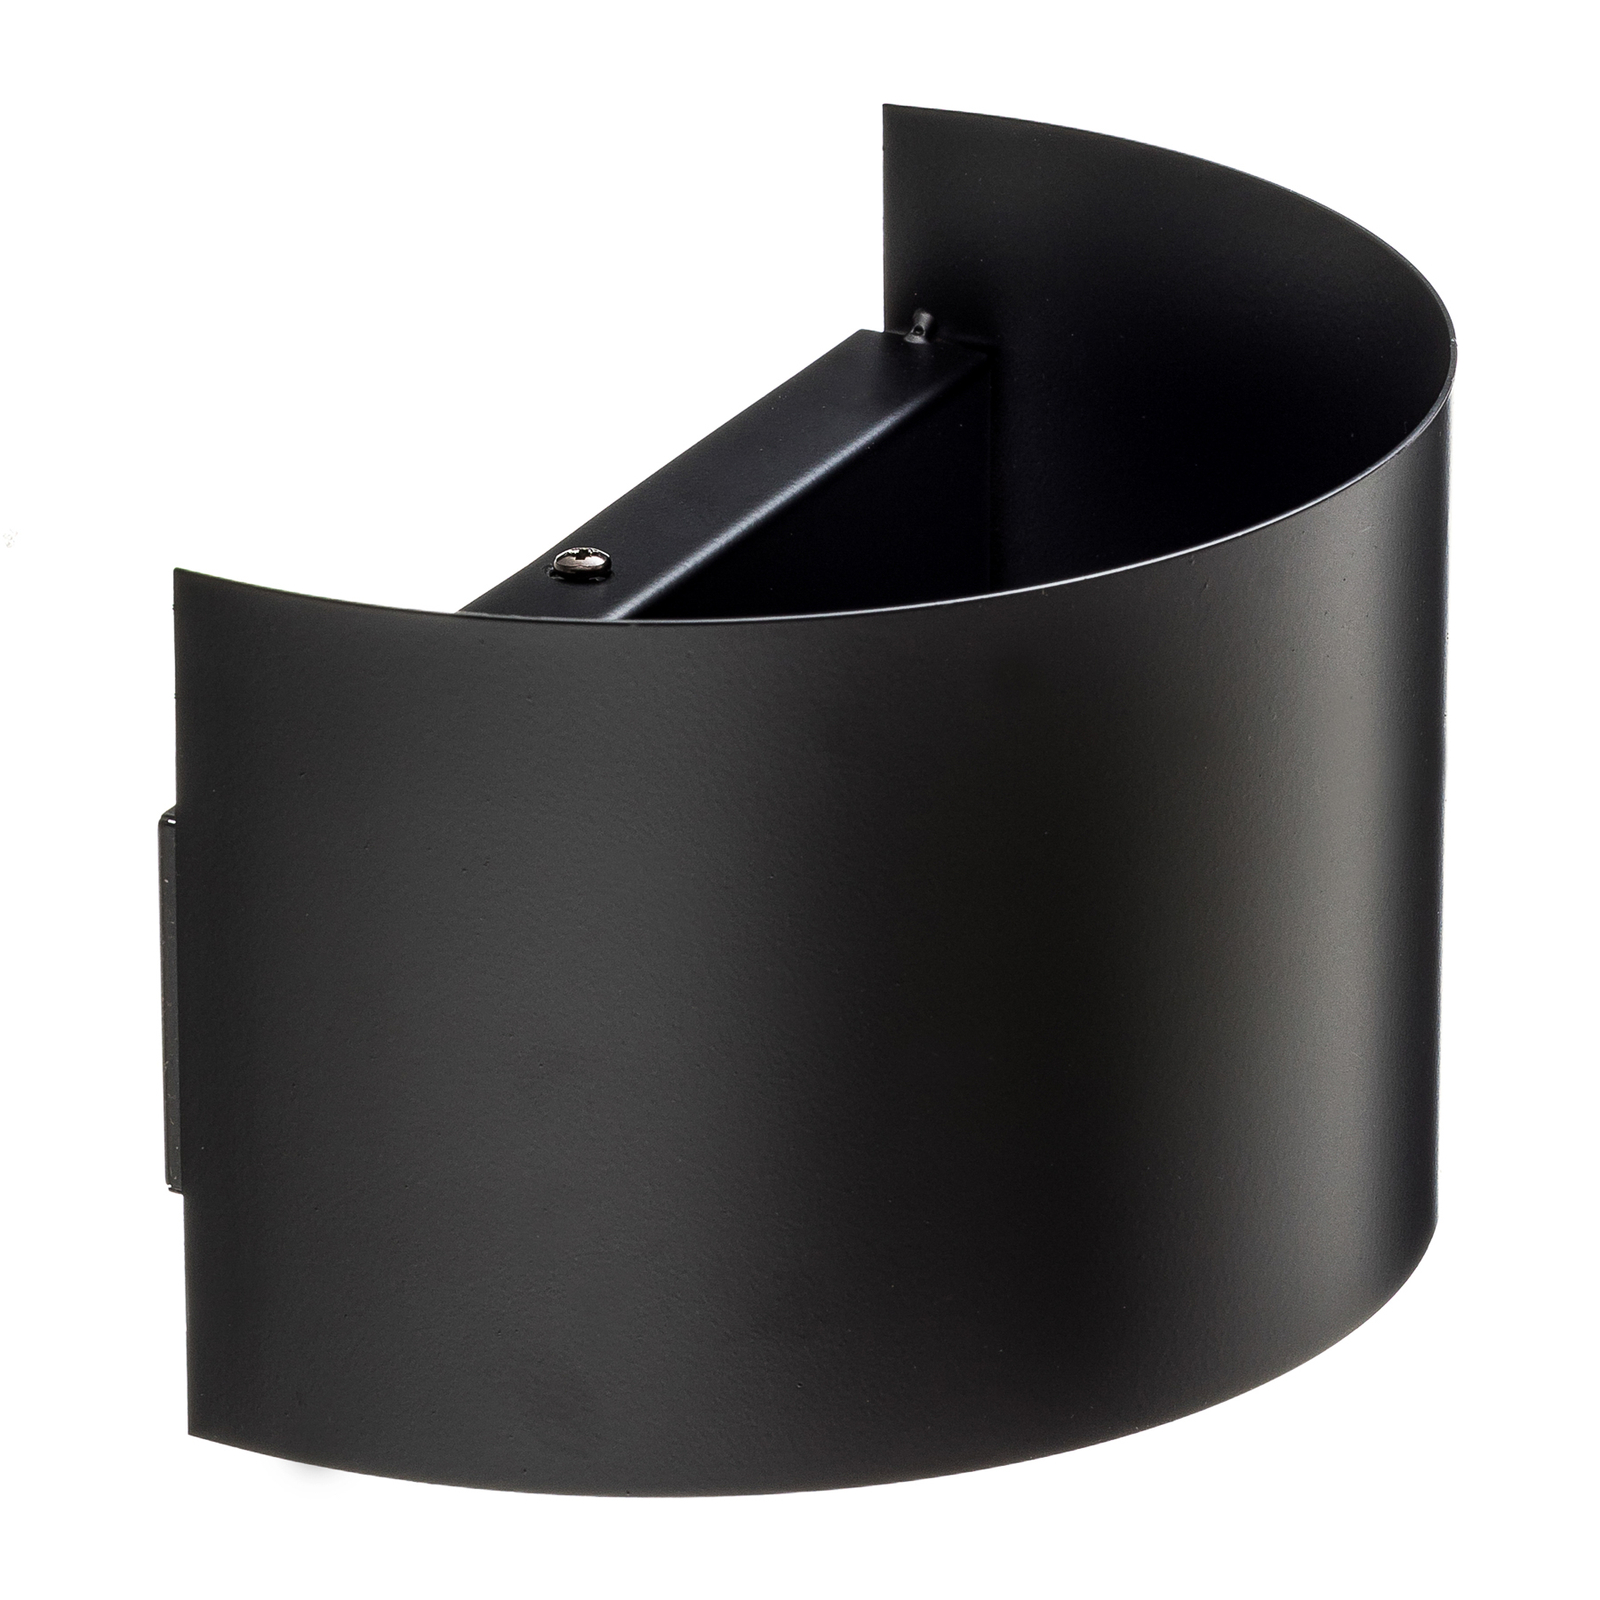 Wandlamp Fold met gewelfde kap in zwart